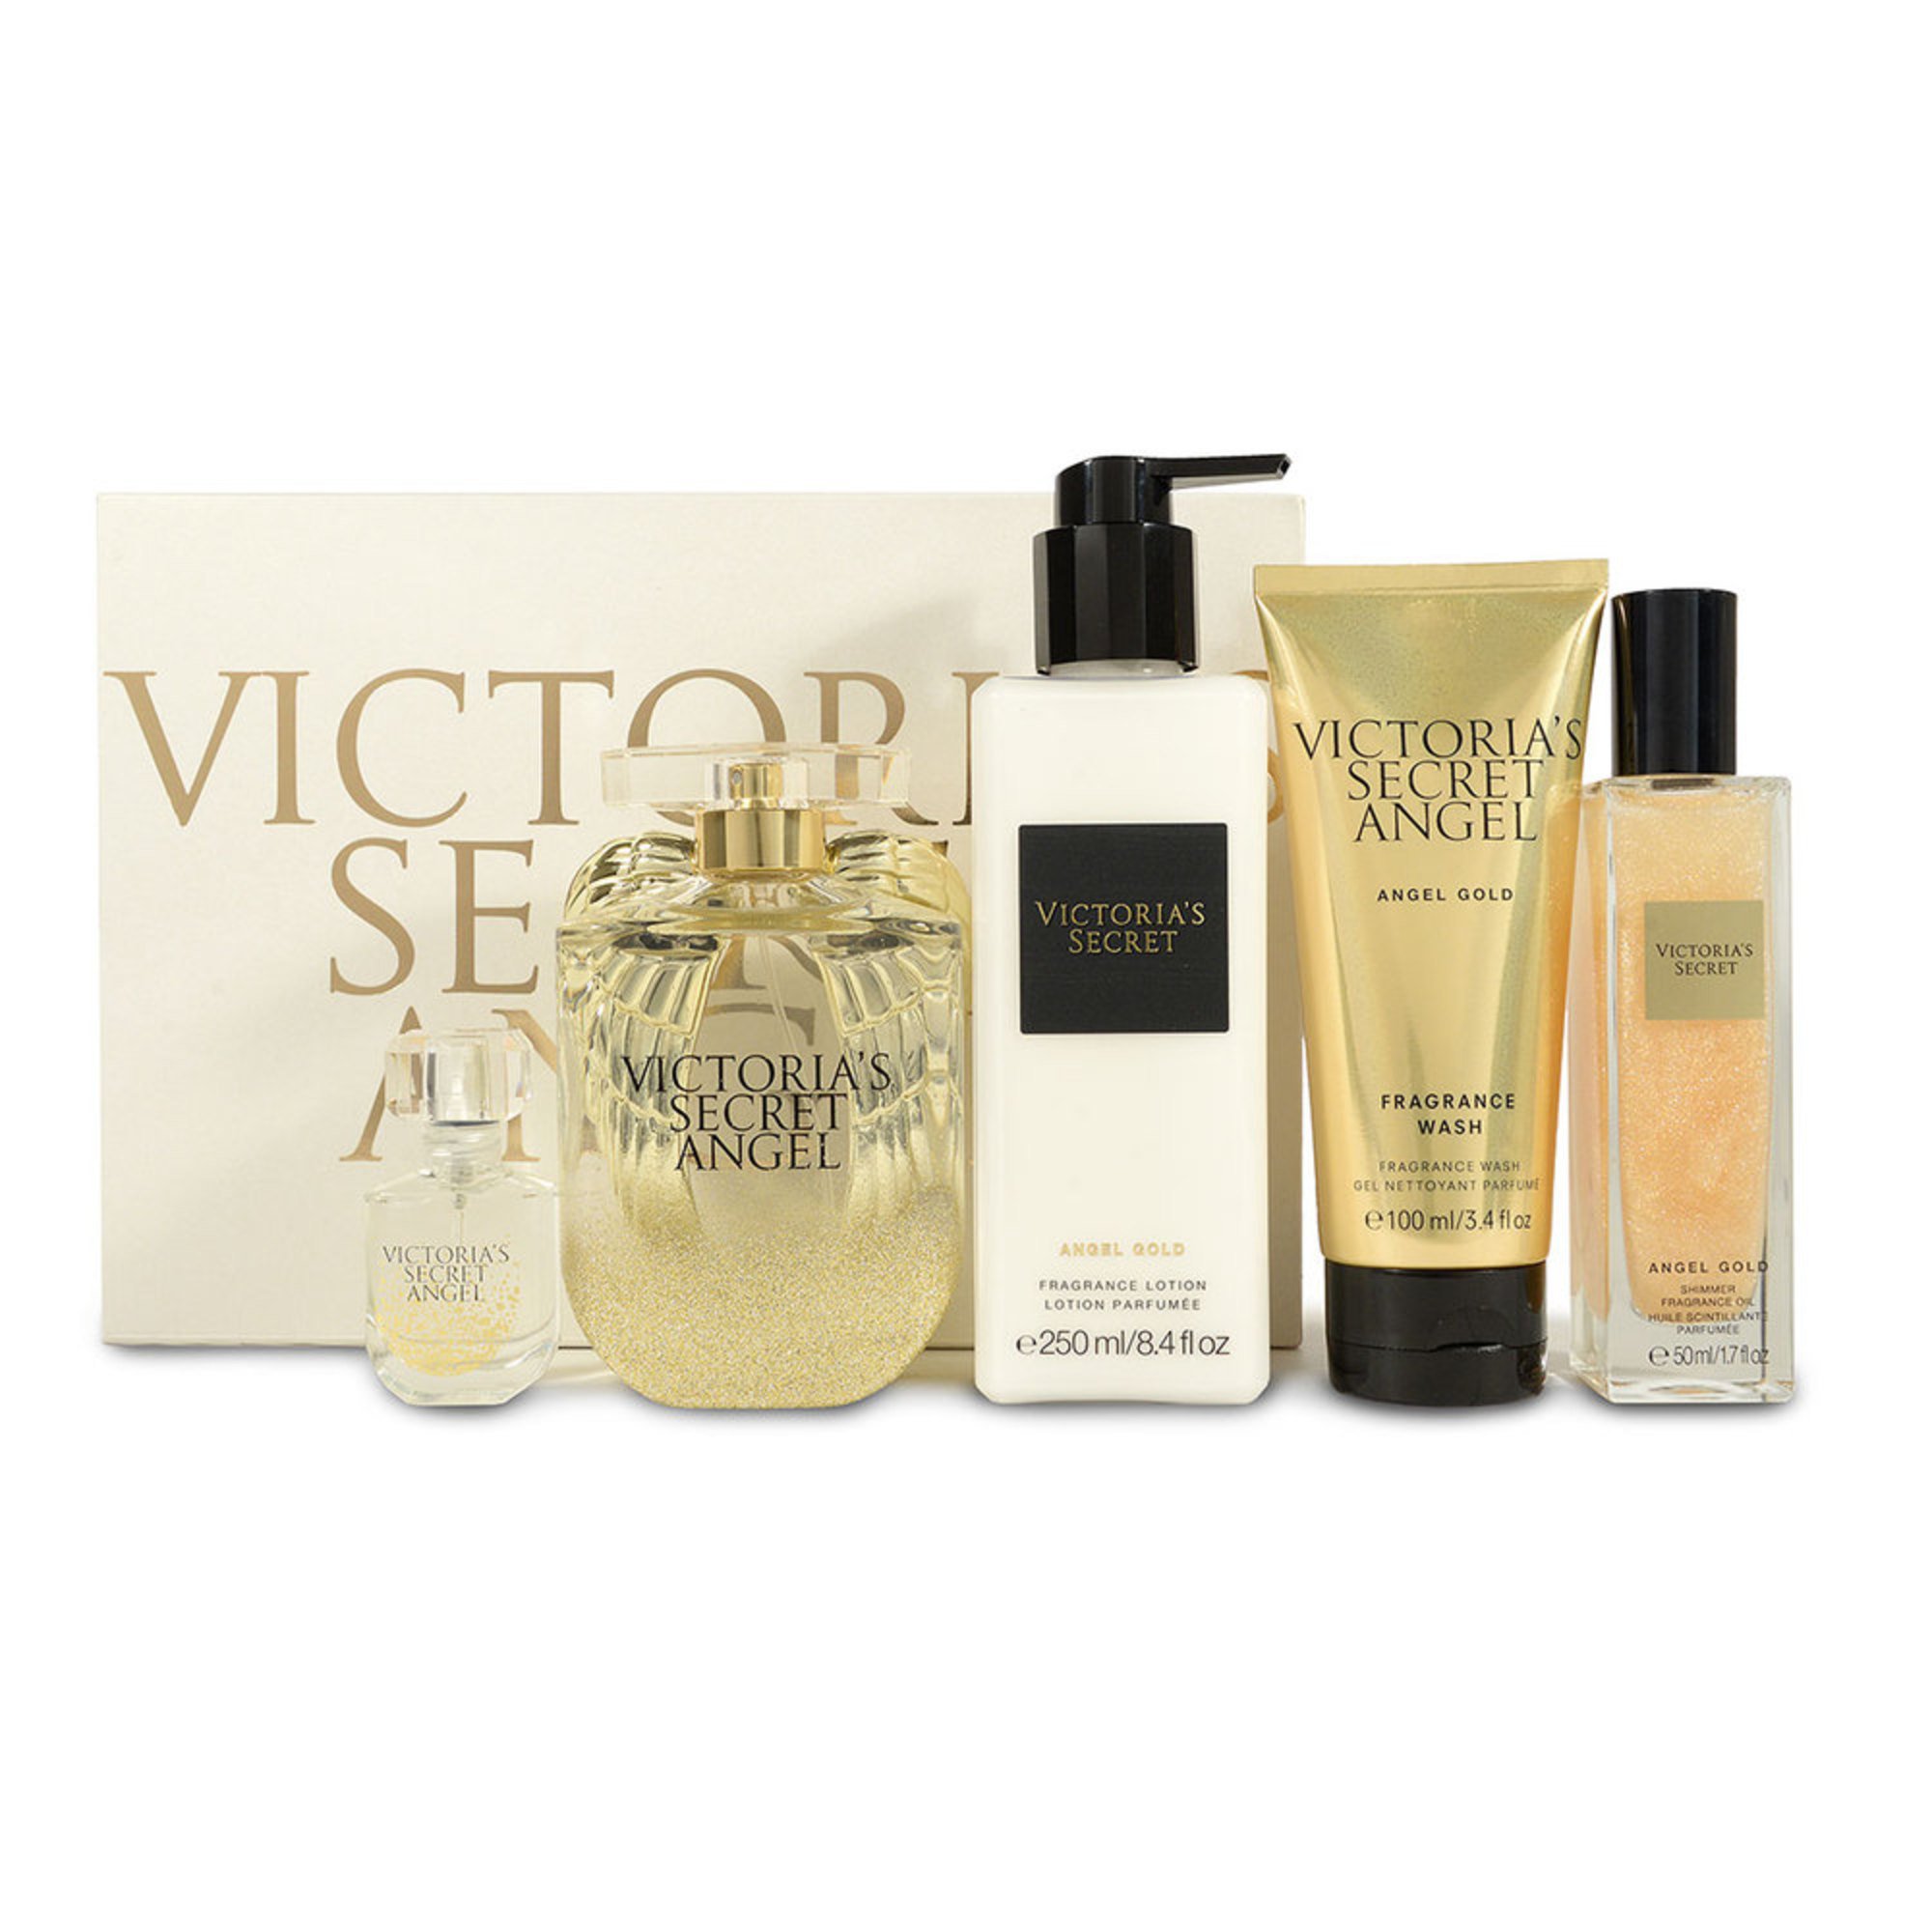 Victoria's Secret Angel Gold Fragrance Box Bath & Body